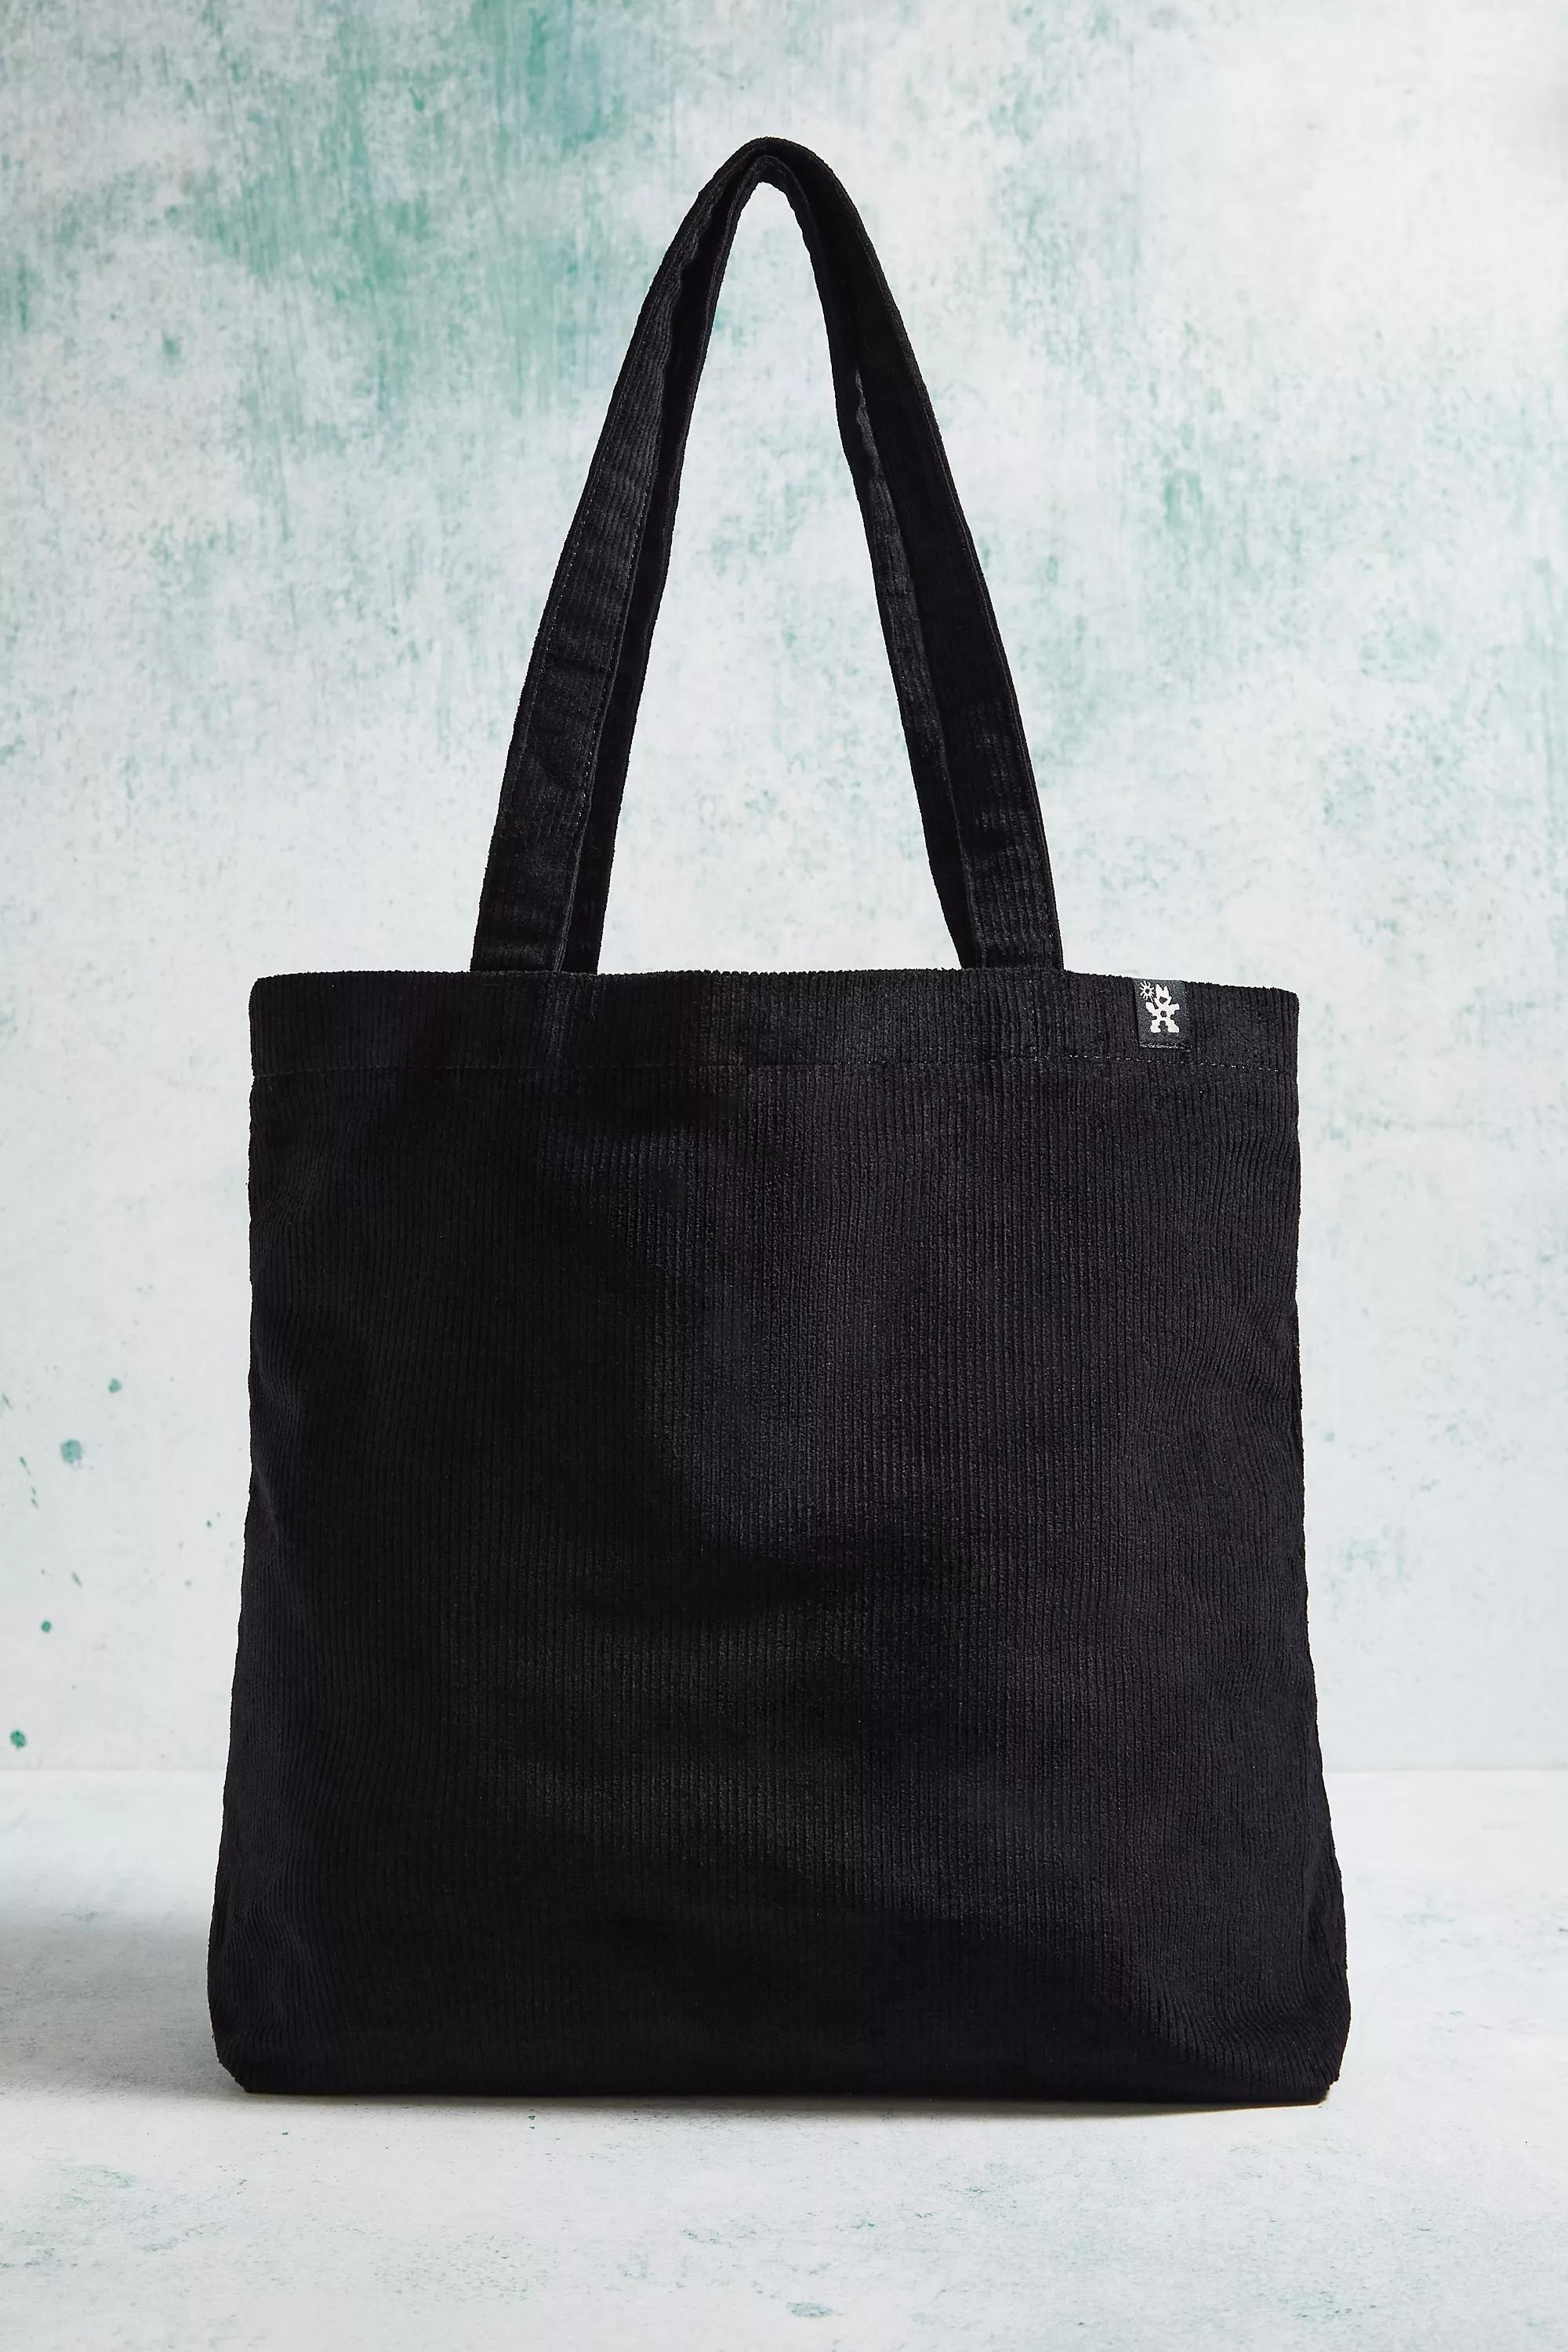 Urban Outfitters - Grey Gunmetal Corduroy Tote Bag